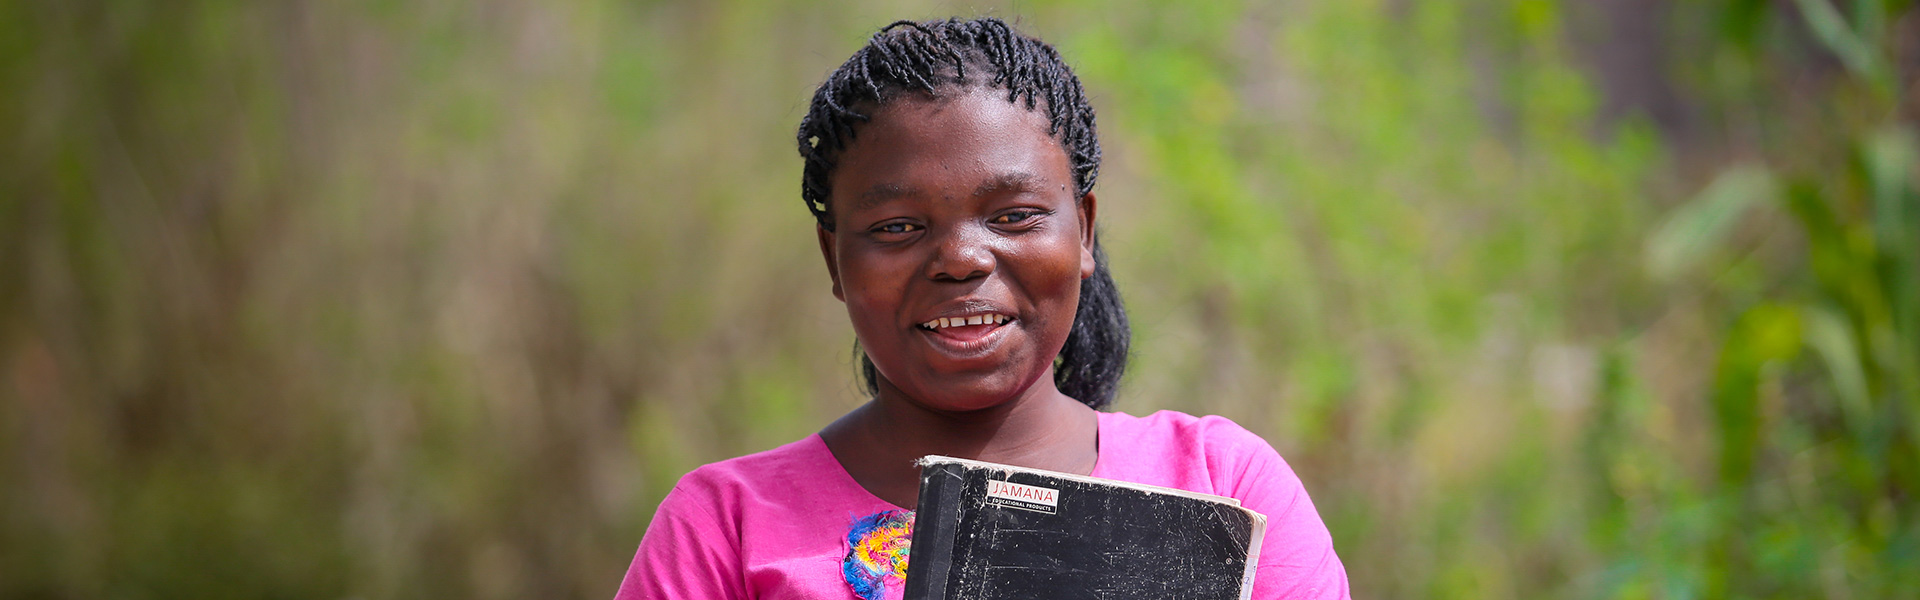 tanzania-bonga-adolescent-girl-with-book